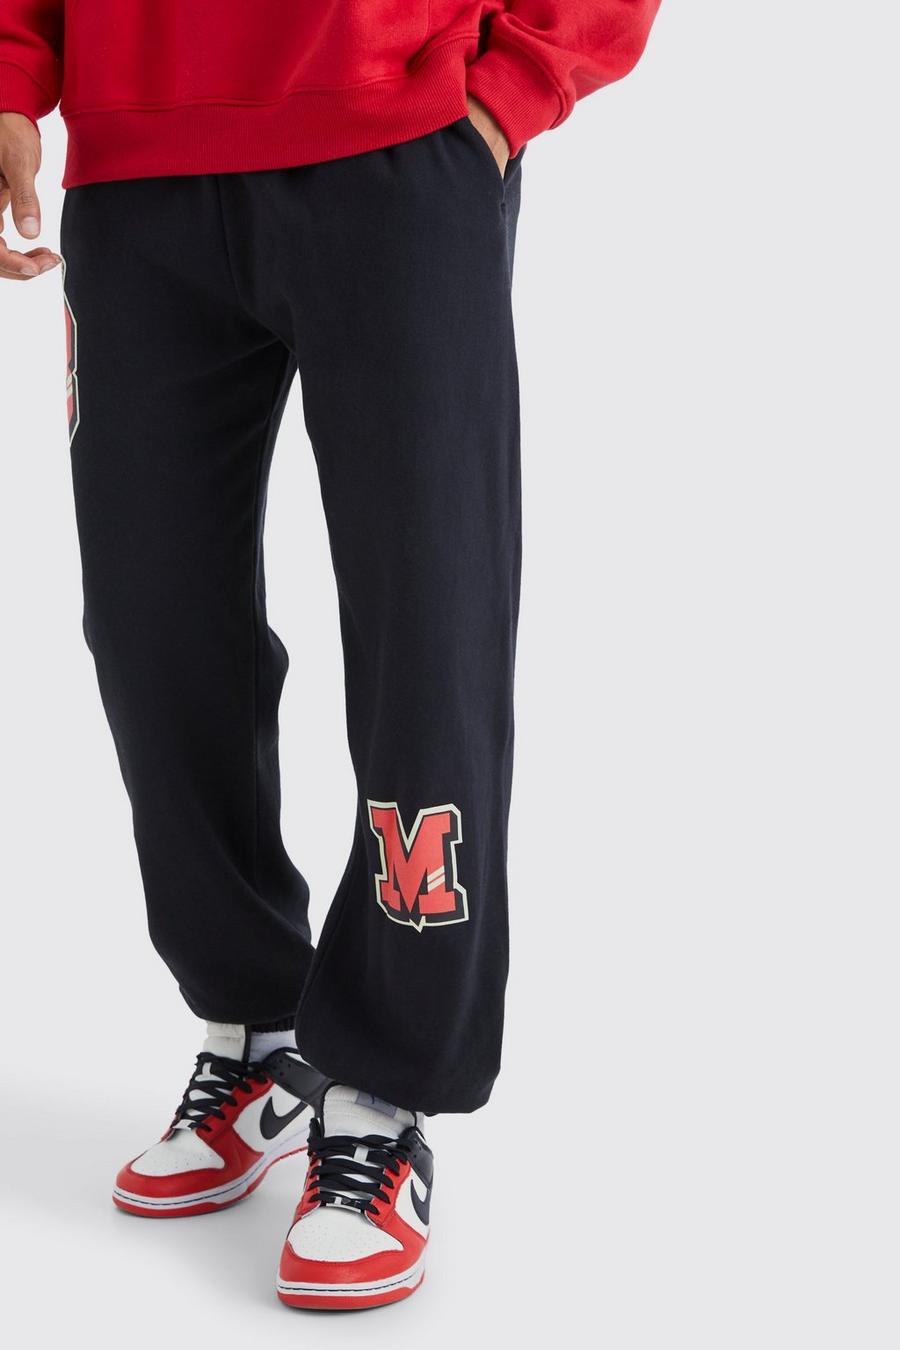 Pantaloni tuta oversize stile Varsity con grafica BM, Black